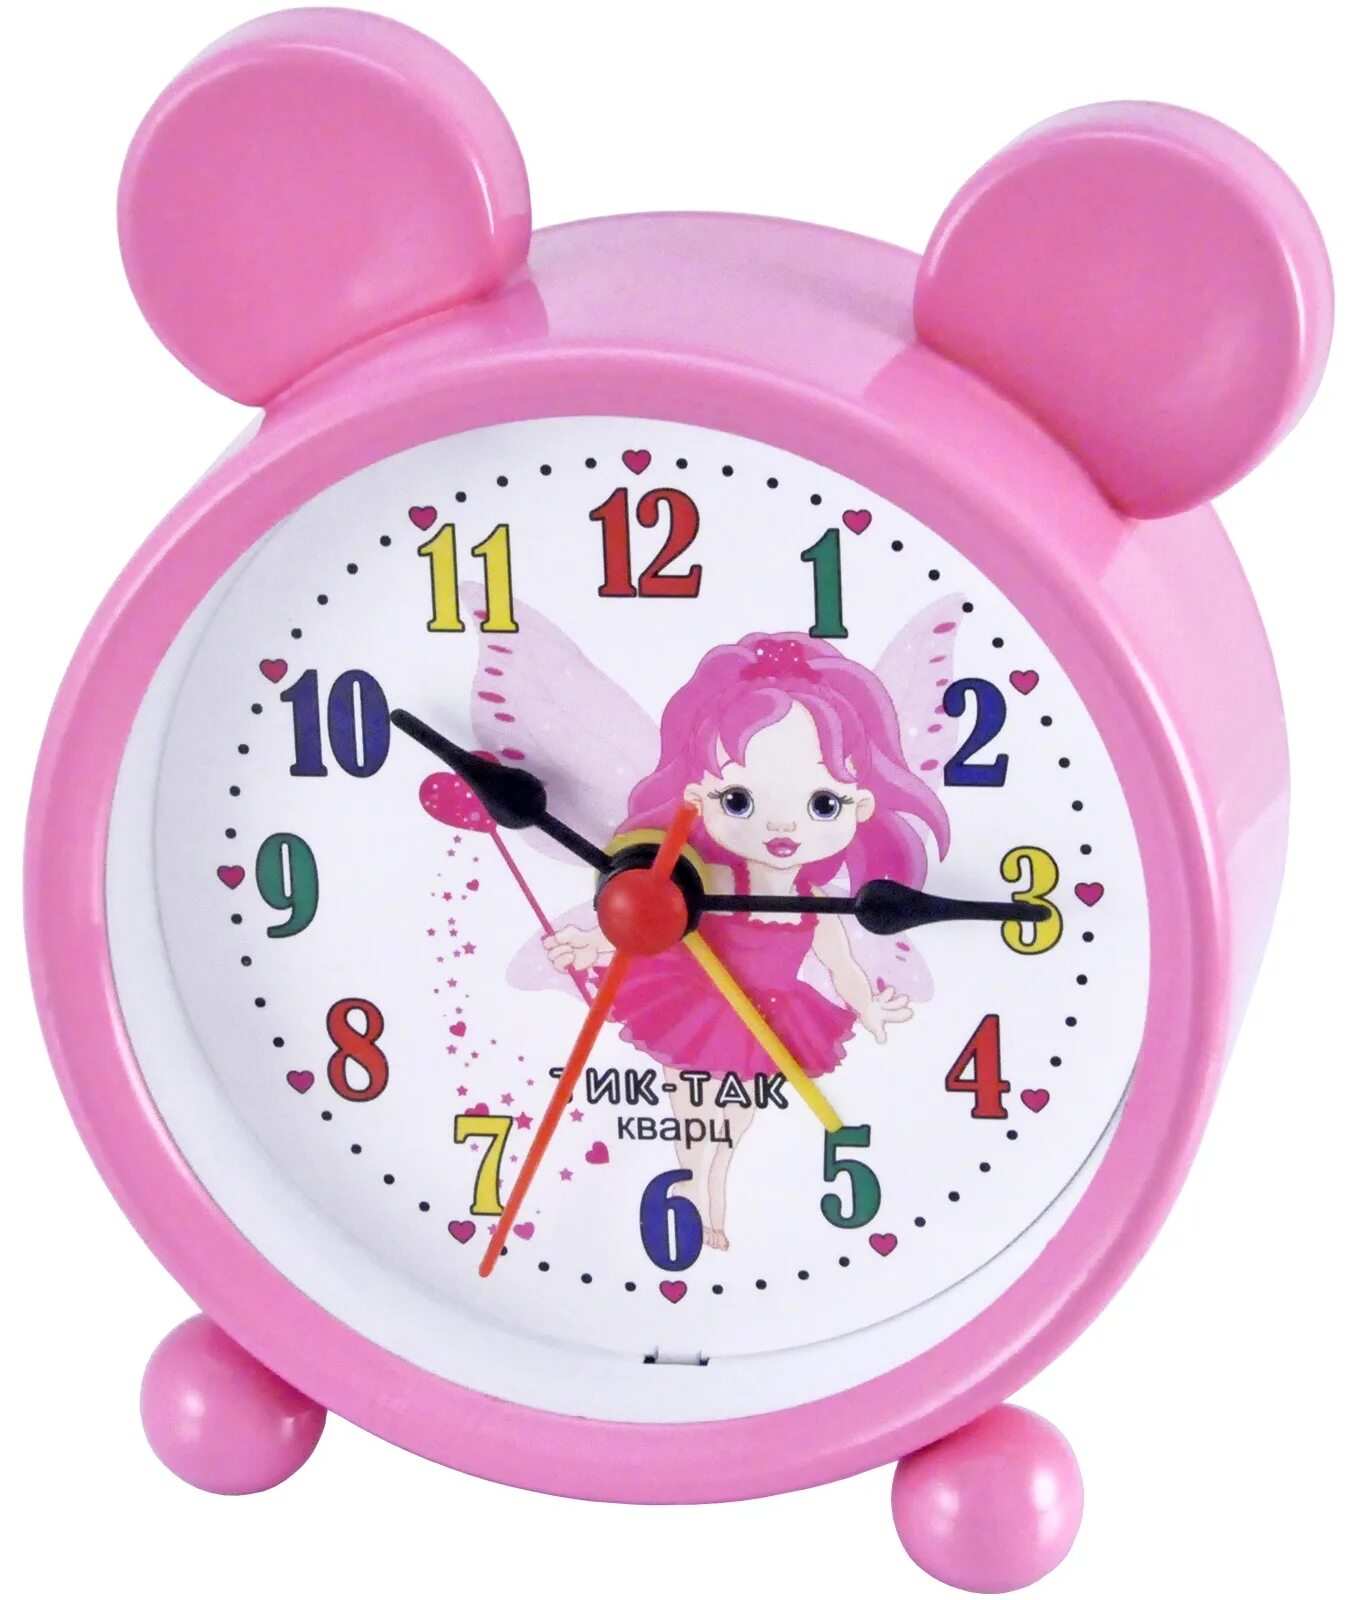 Фотка будильника. Будильник тик-так б-019. Будильник детский. Часы будильник детские. Часы будильник, розовый.